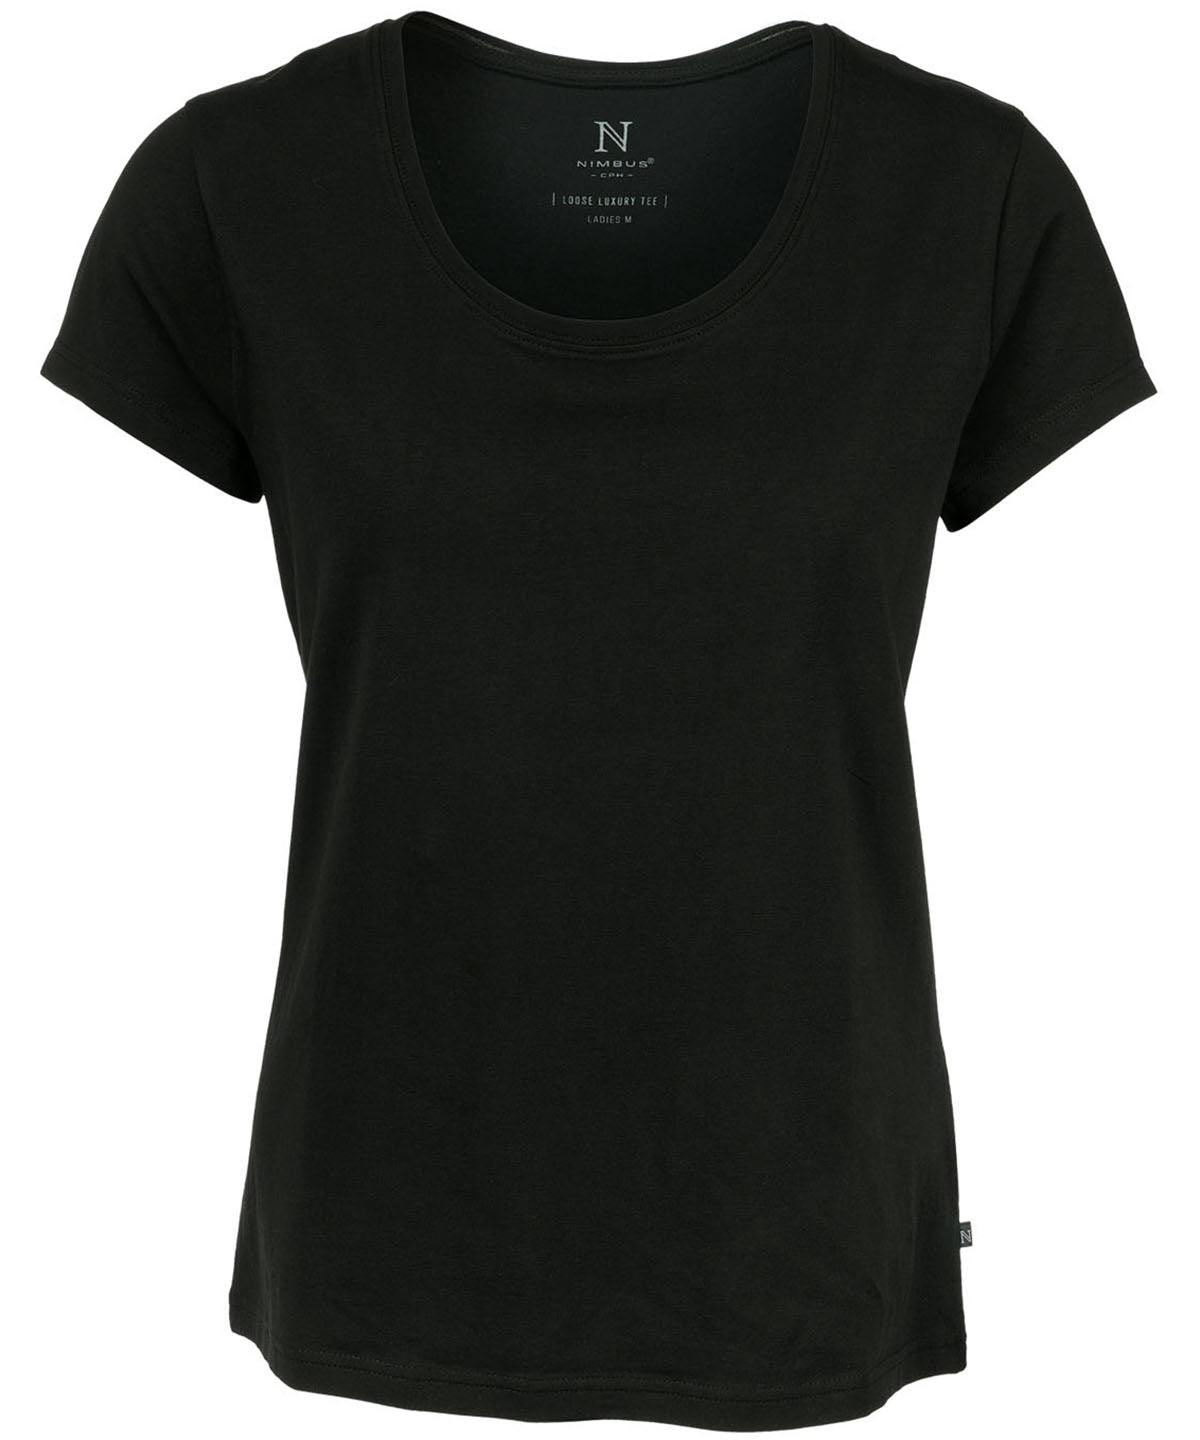 Personalised T-Shirts - Black Nimbus Women’s Montauk – the essential tee